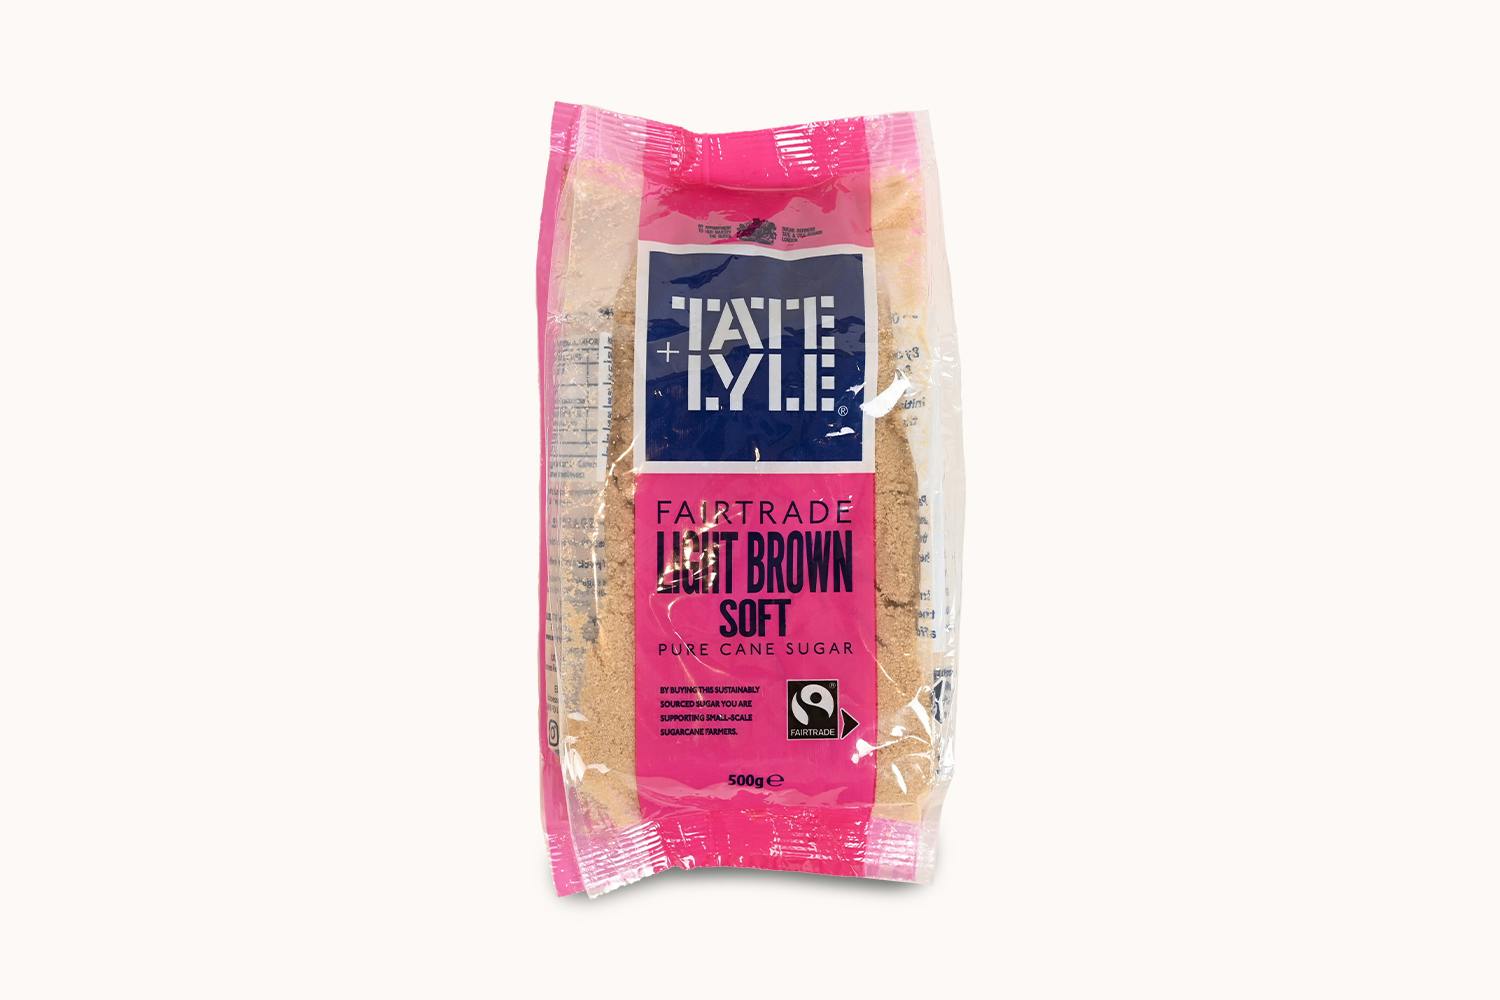 Tate & Lyle Light Brown Soft Sugar